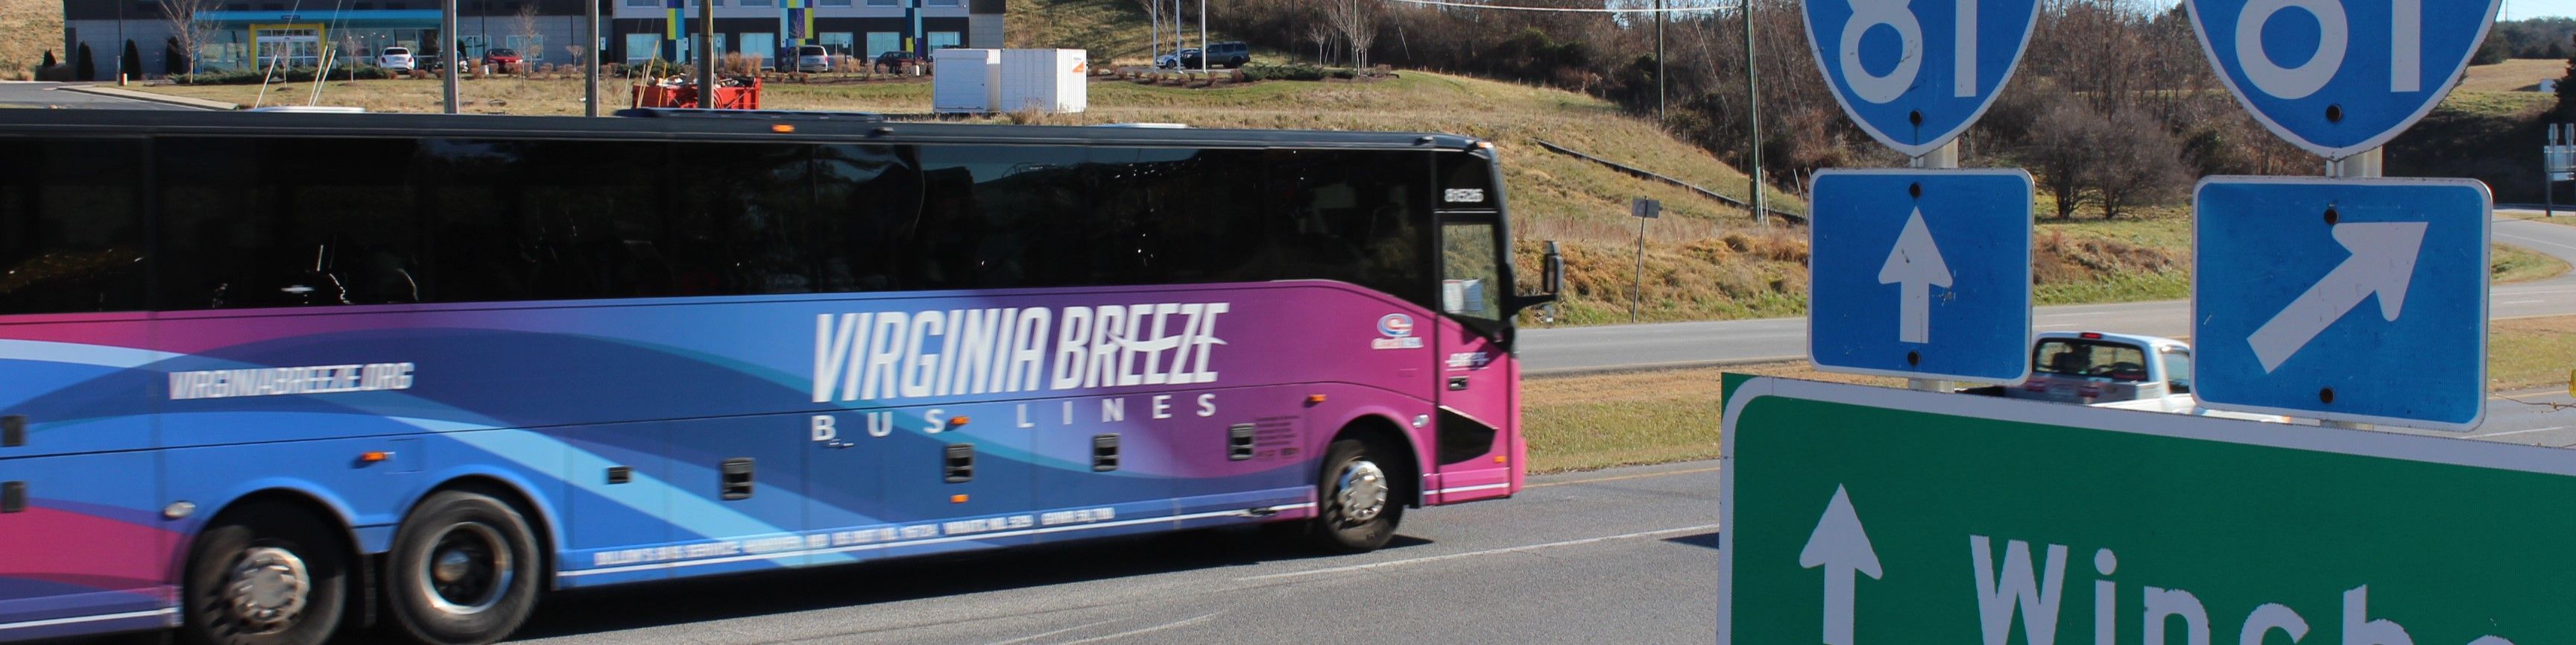 Virginia Breeze bus